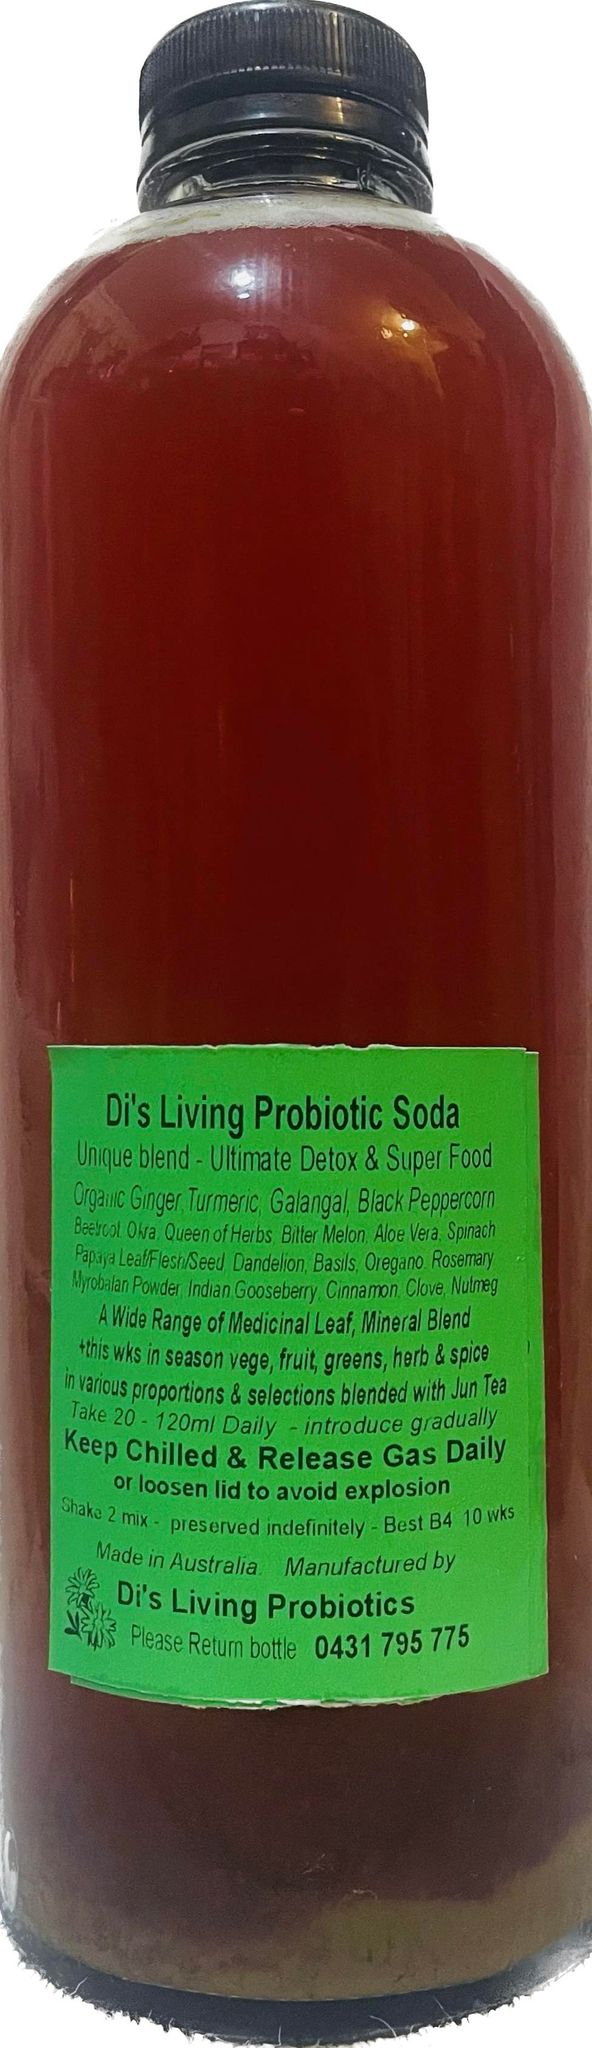 Di’s Living Probiotic Soda